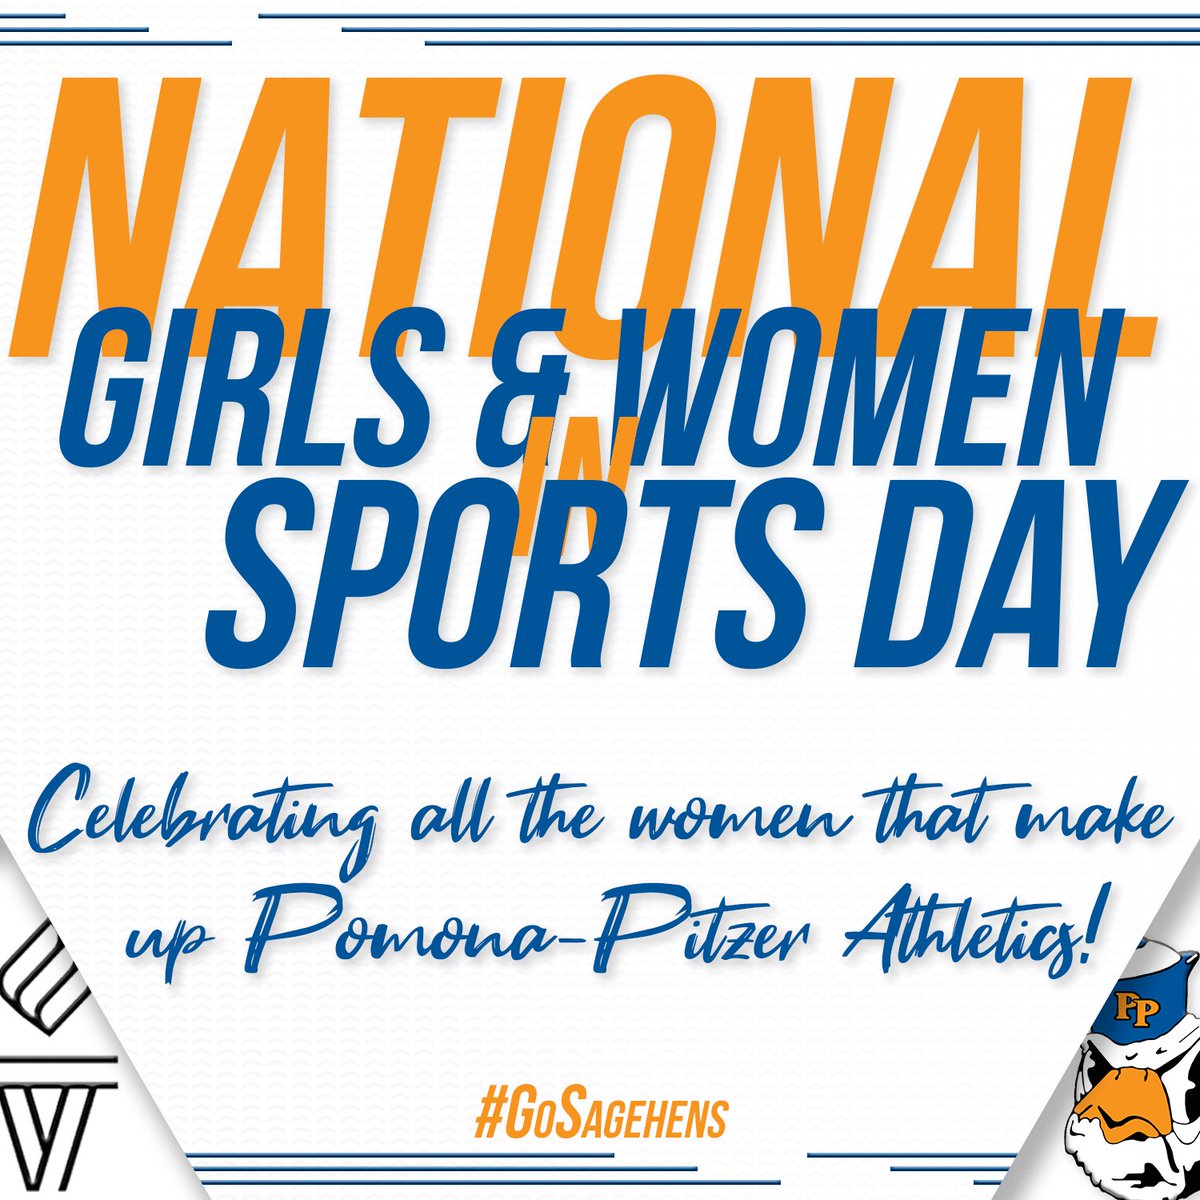 We’re thankful for all the women who make up Pomona-Pitzer Athletics! #GoSagehens #NGWSD #LeadHerForward